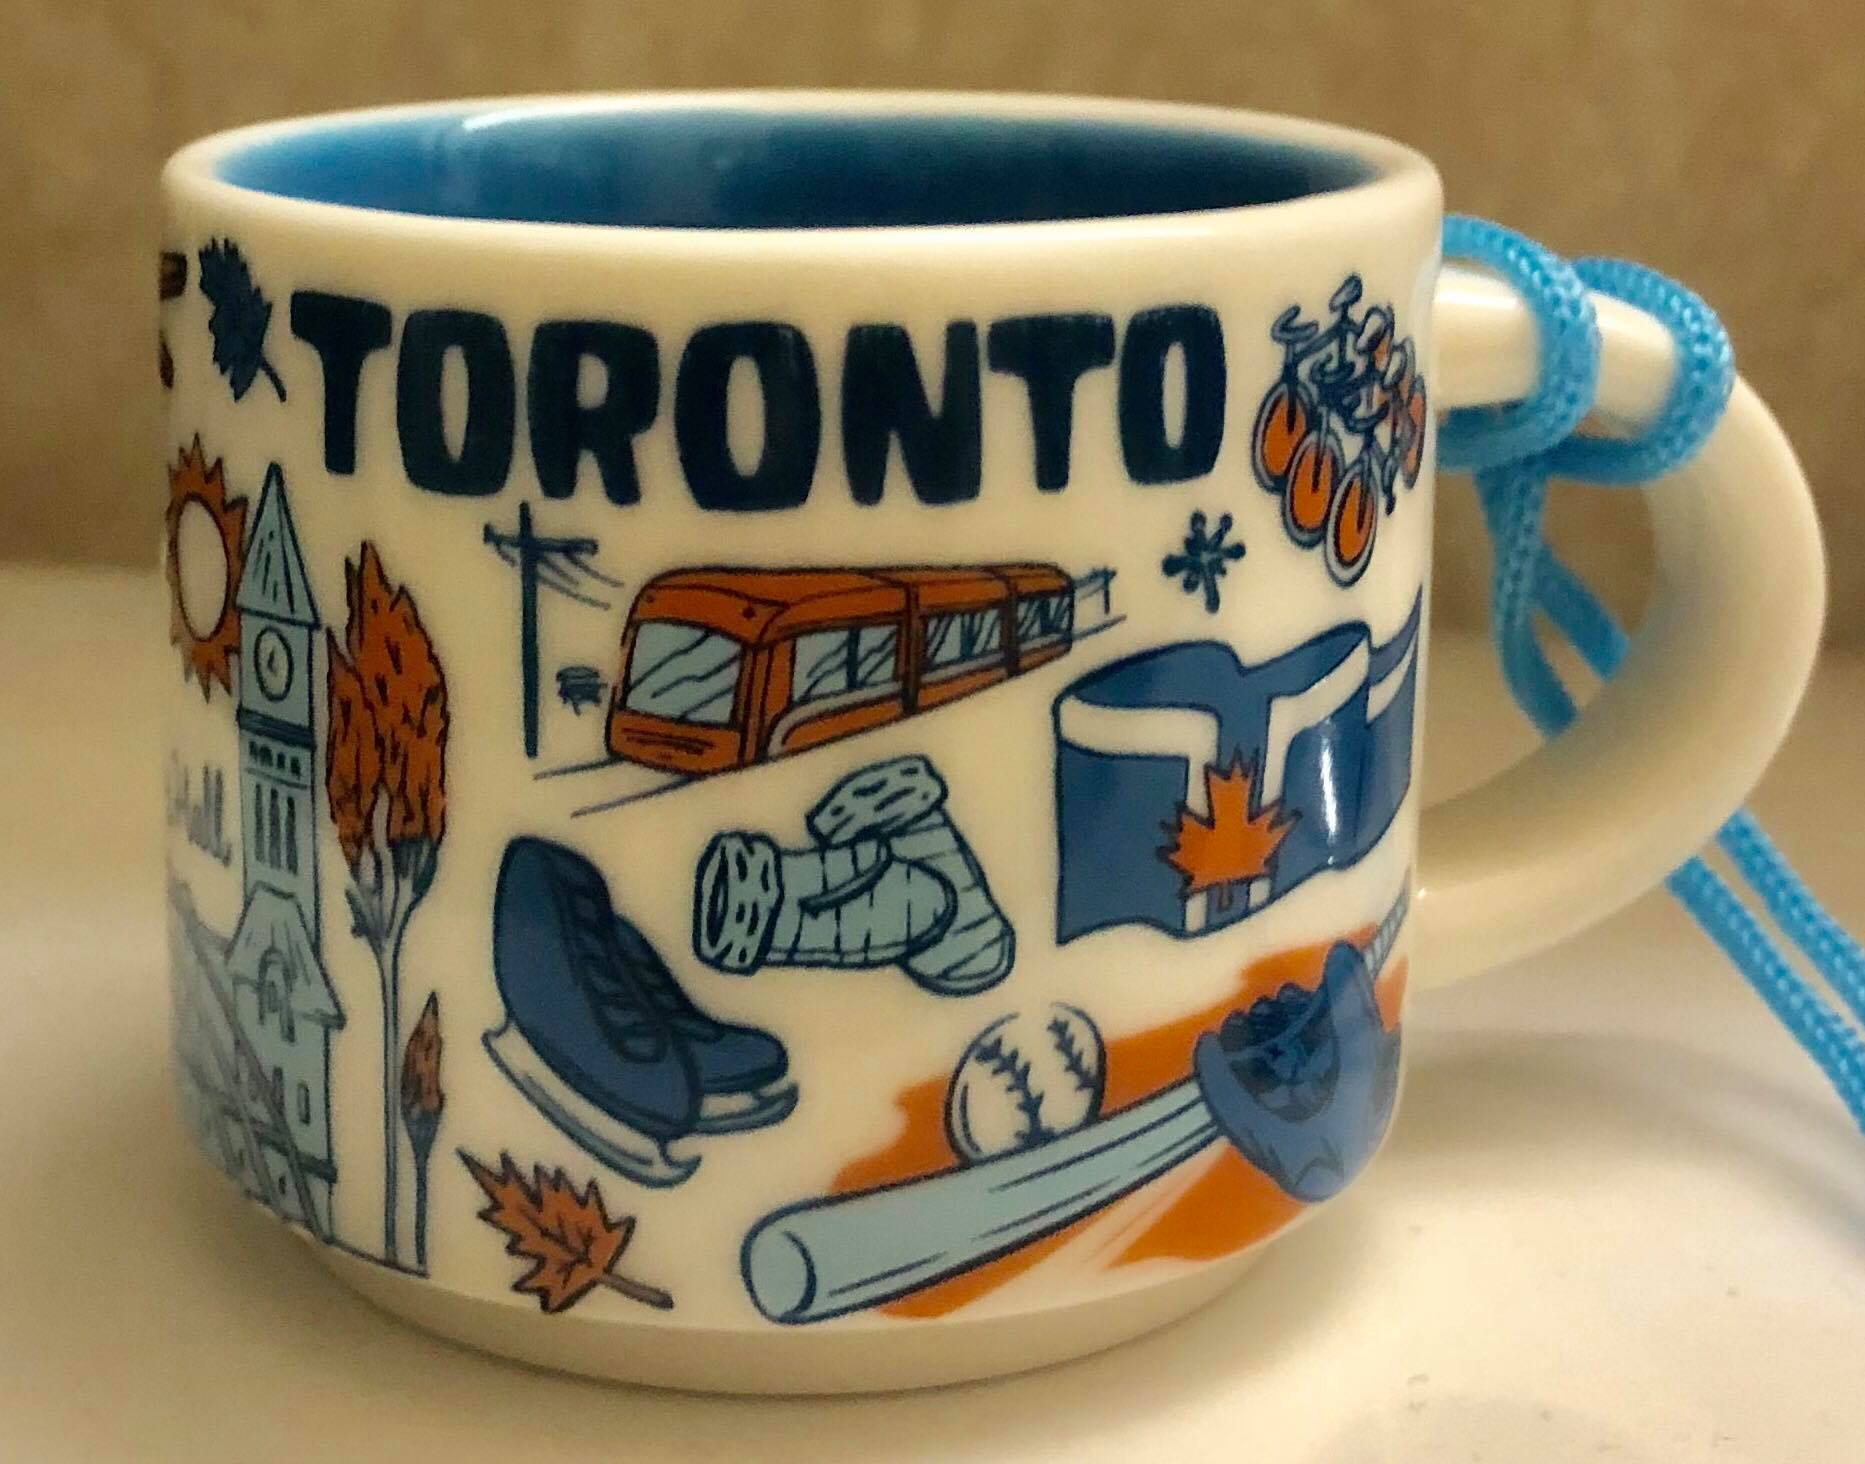 New Starbucks Been There Series Coffee Mug 2018 Toronto Canada 14 fl oz 